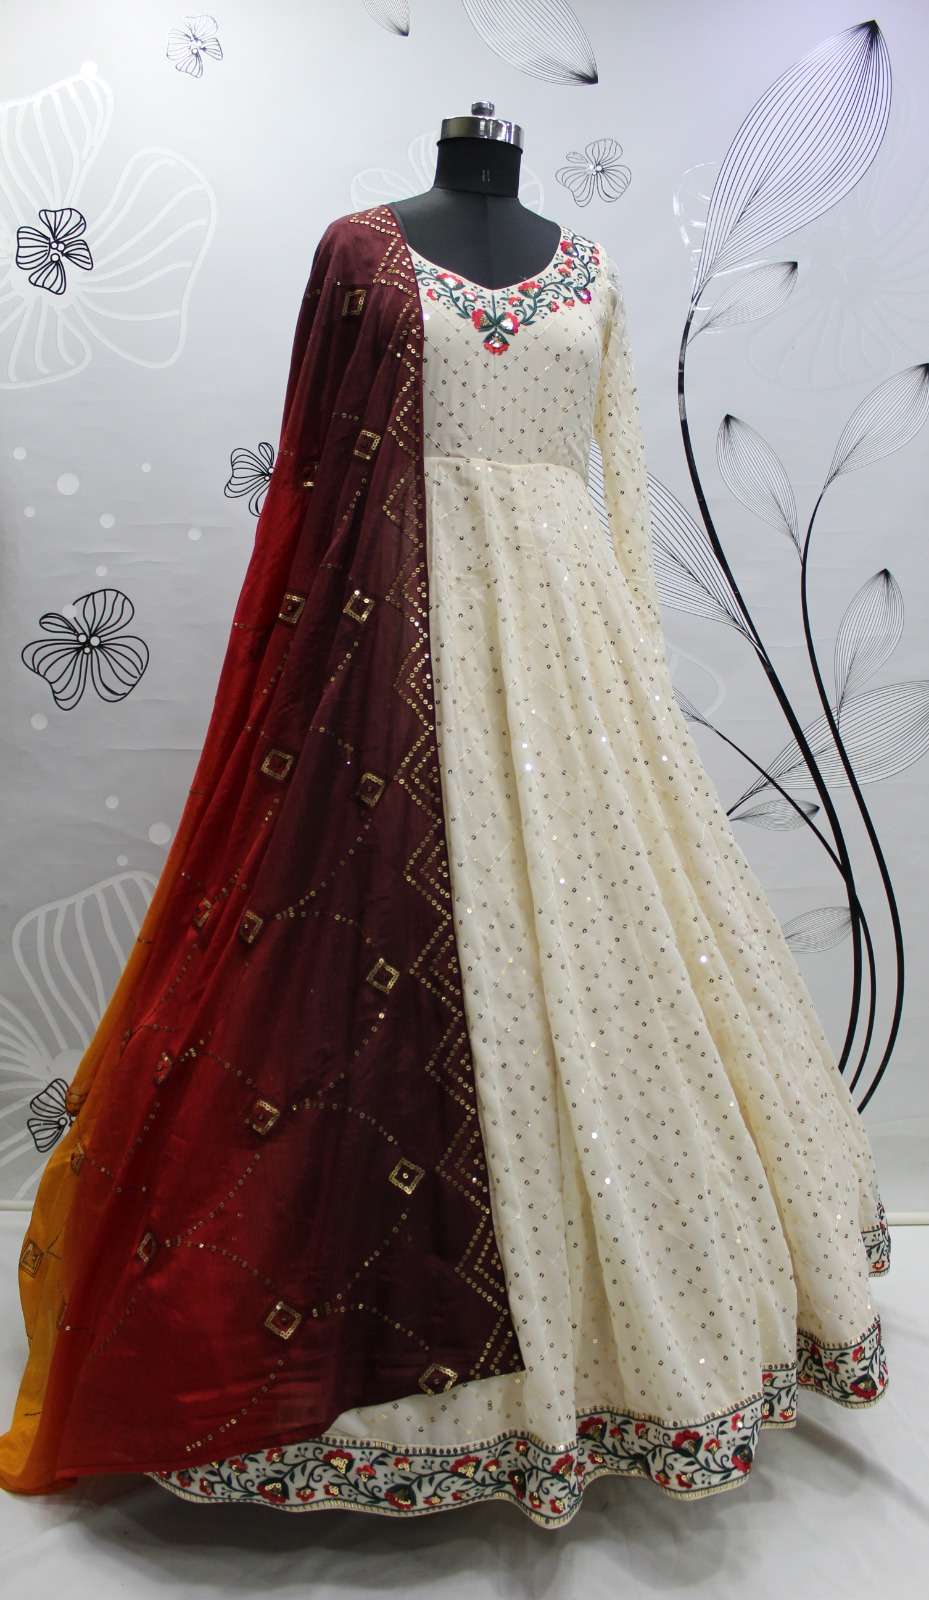 shubhkala flory vol-30 4861-4864 series exclusive designer readymade designer gown with dupatta catalogue manufacturer surat 